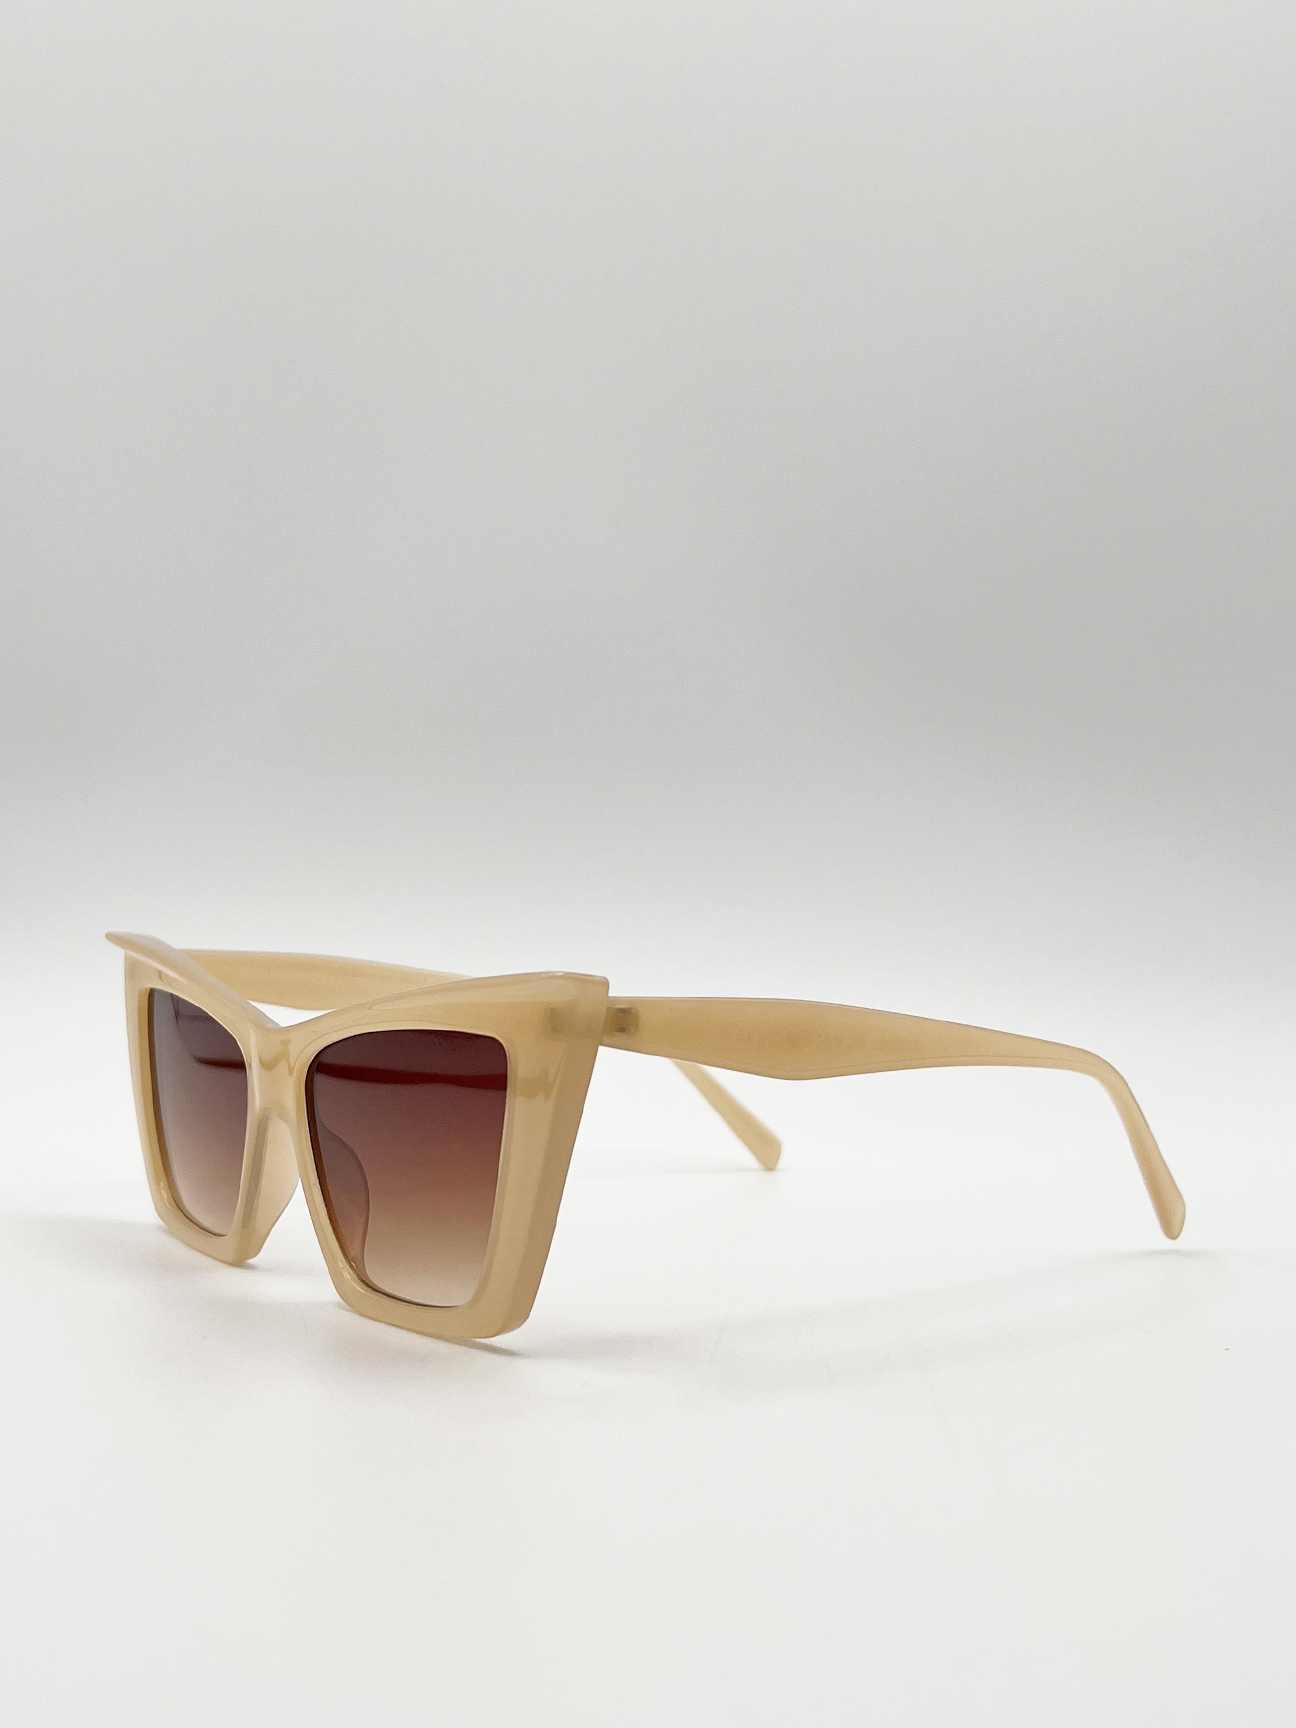 Oversized angular cateye sunglasses in Mocha